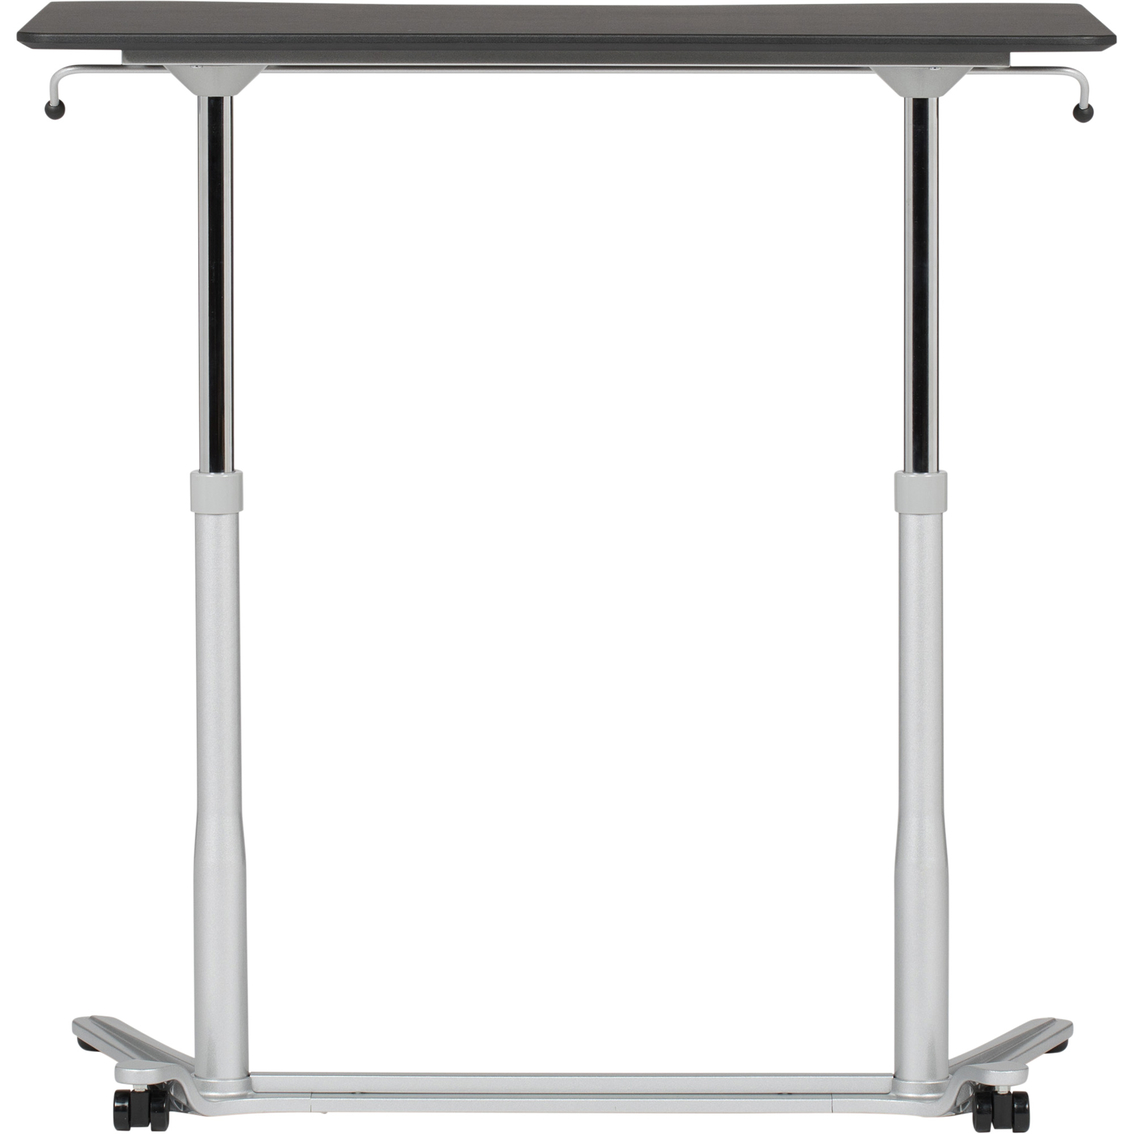 Calico Designs Sierra Adjustable Height Desk